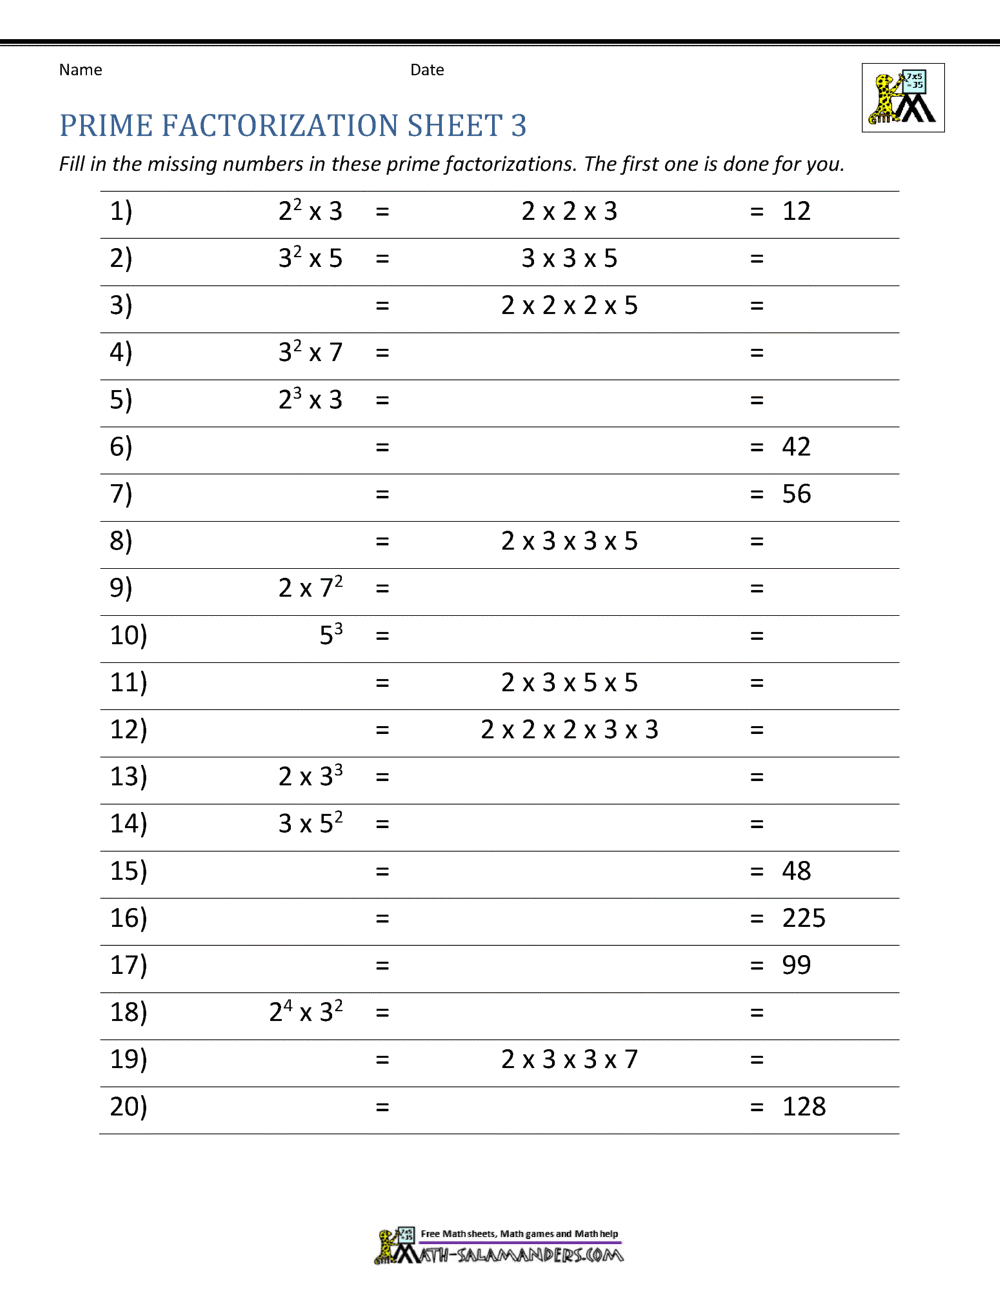 prime-factorization-sheet